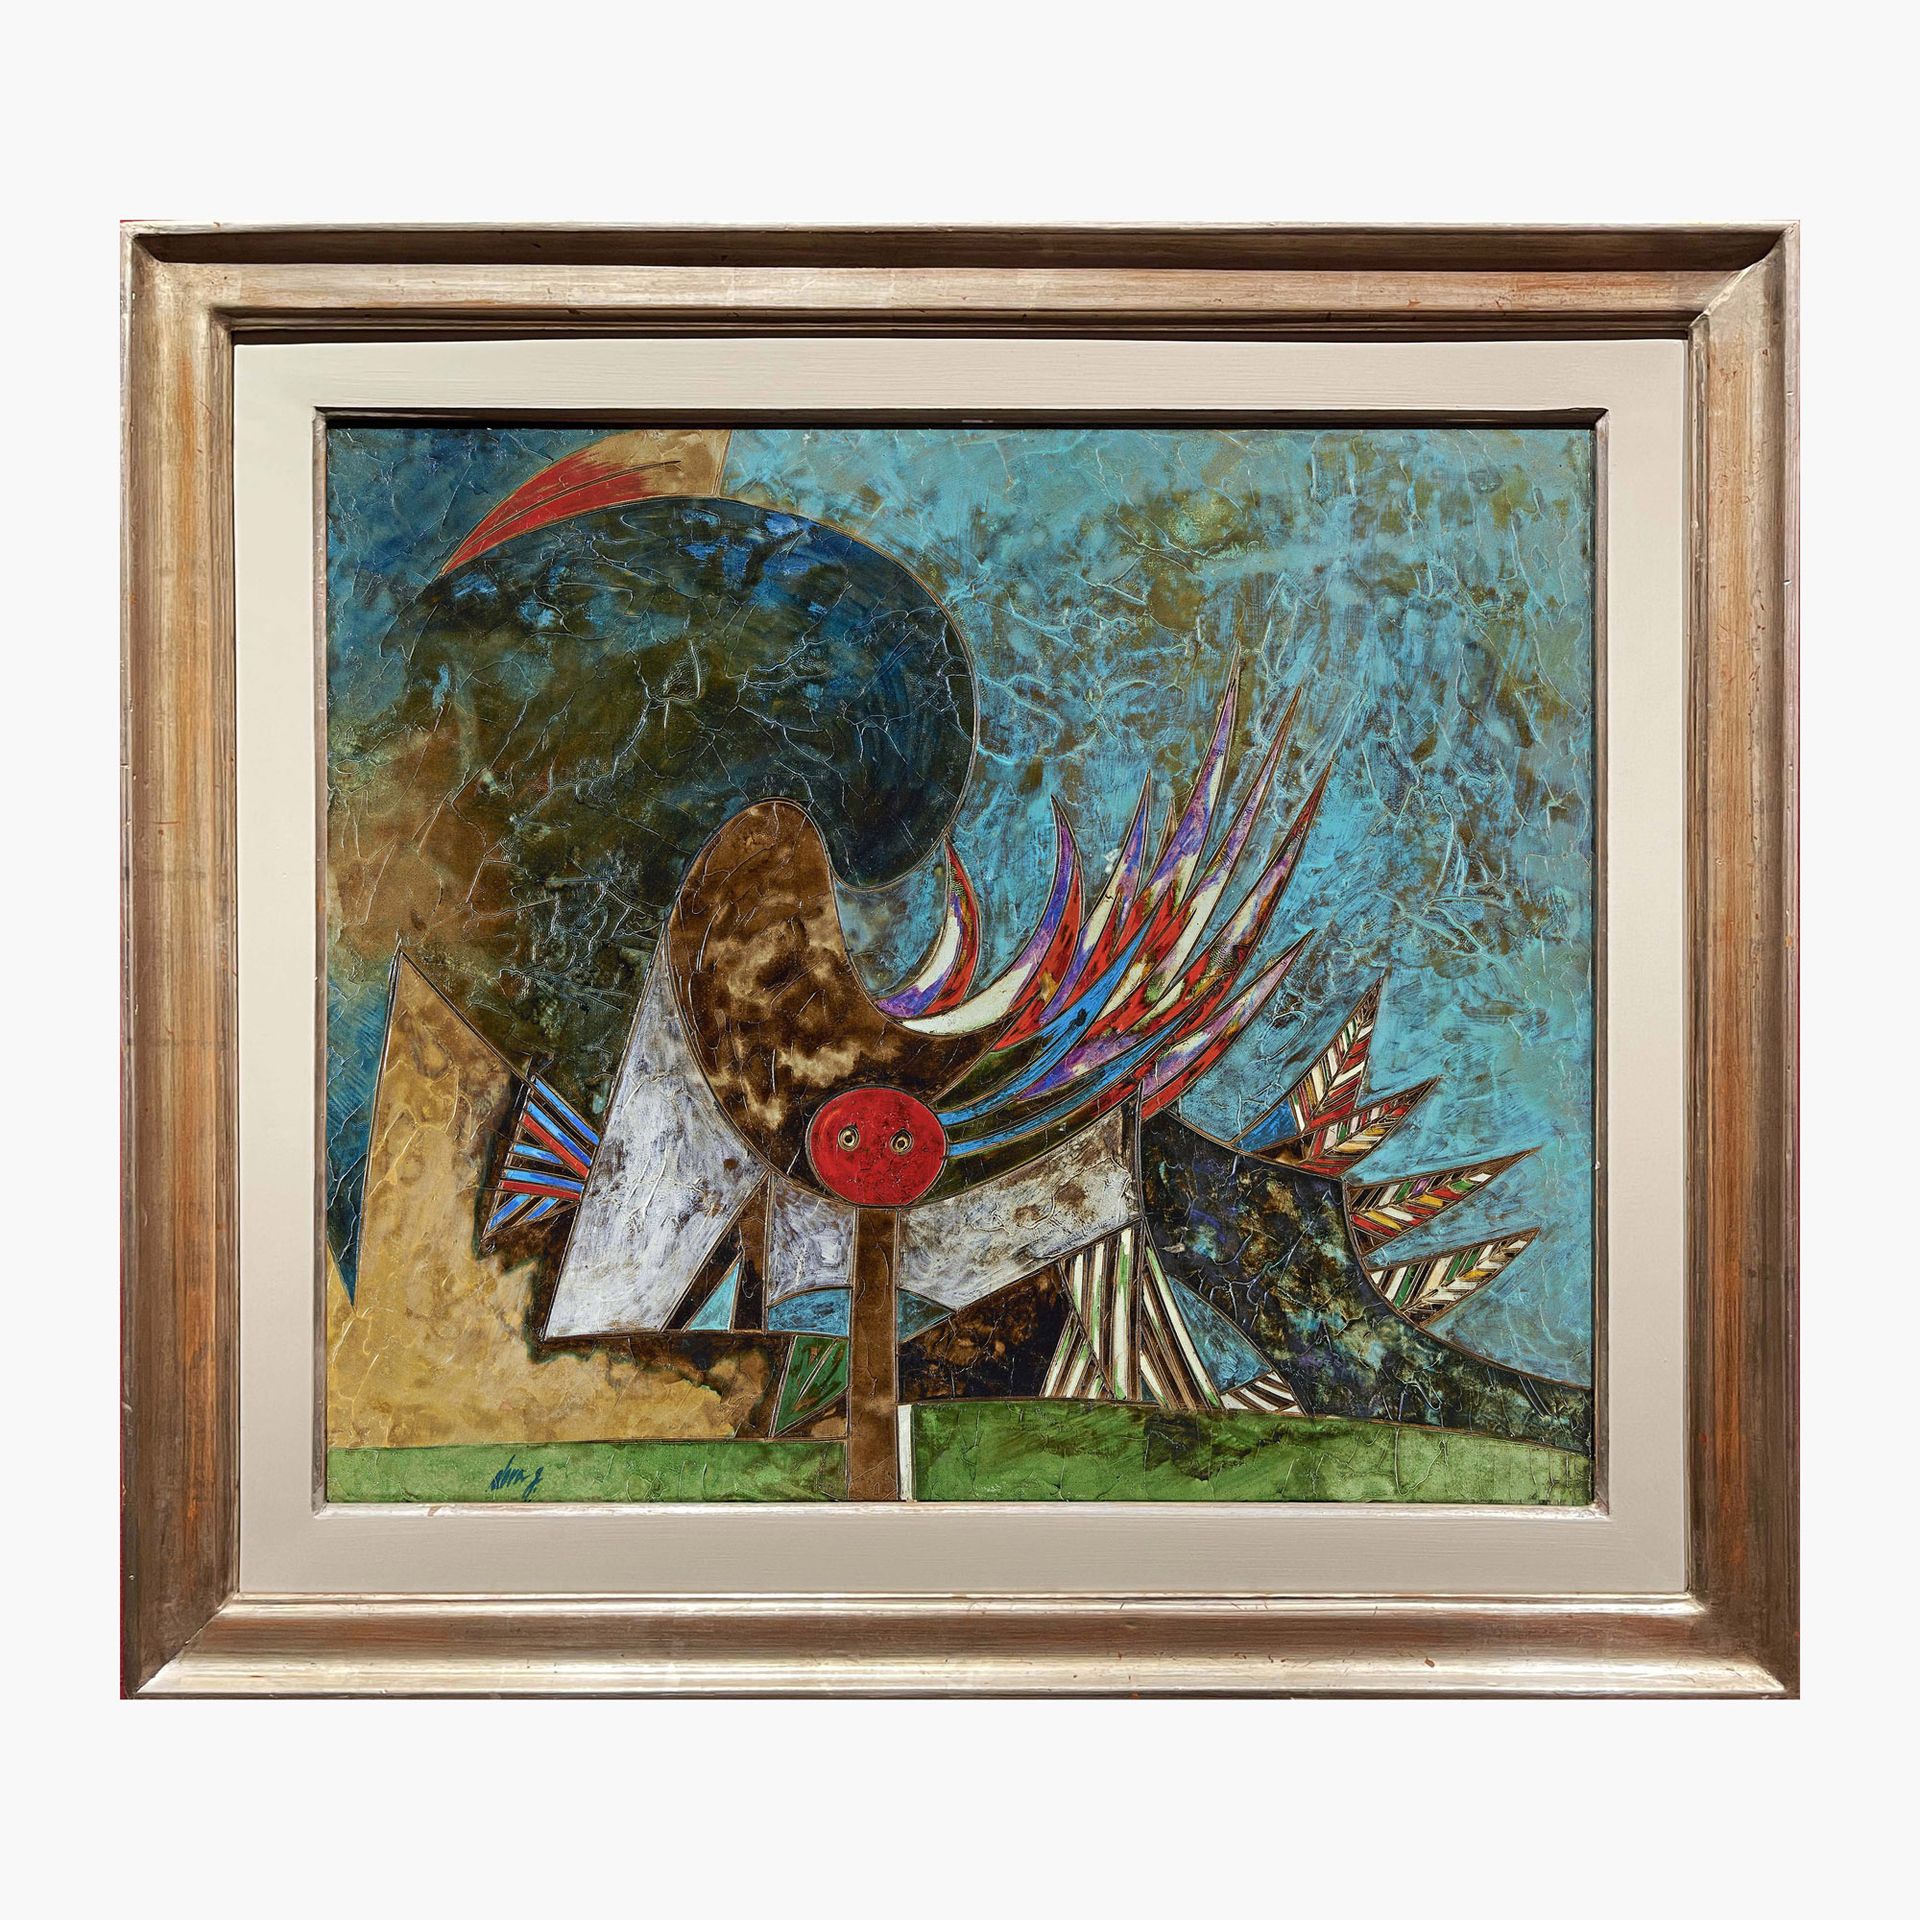 Gianni Dova Gianni Dova, Uccello tra le foglie e i fiori



1967

Oil on canvas
&hellip;